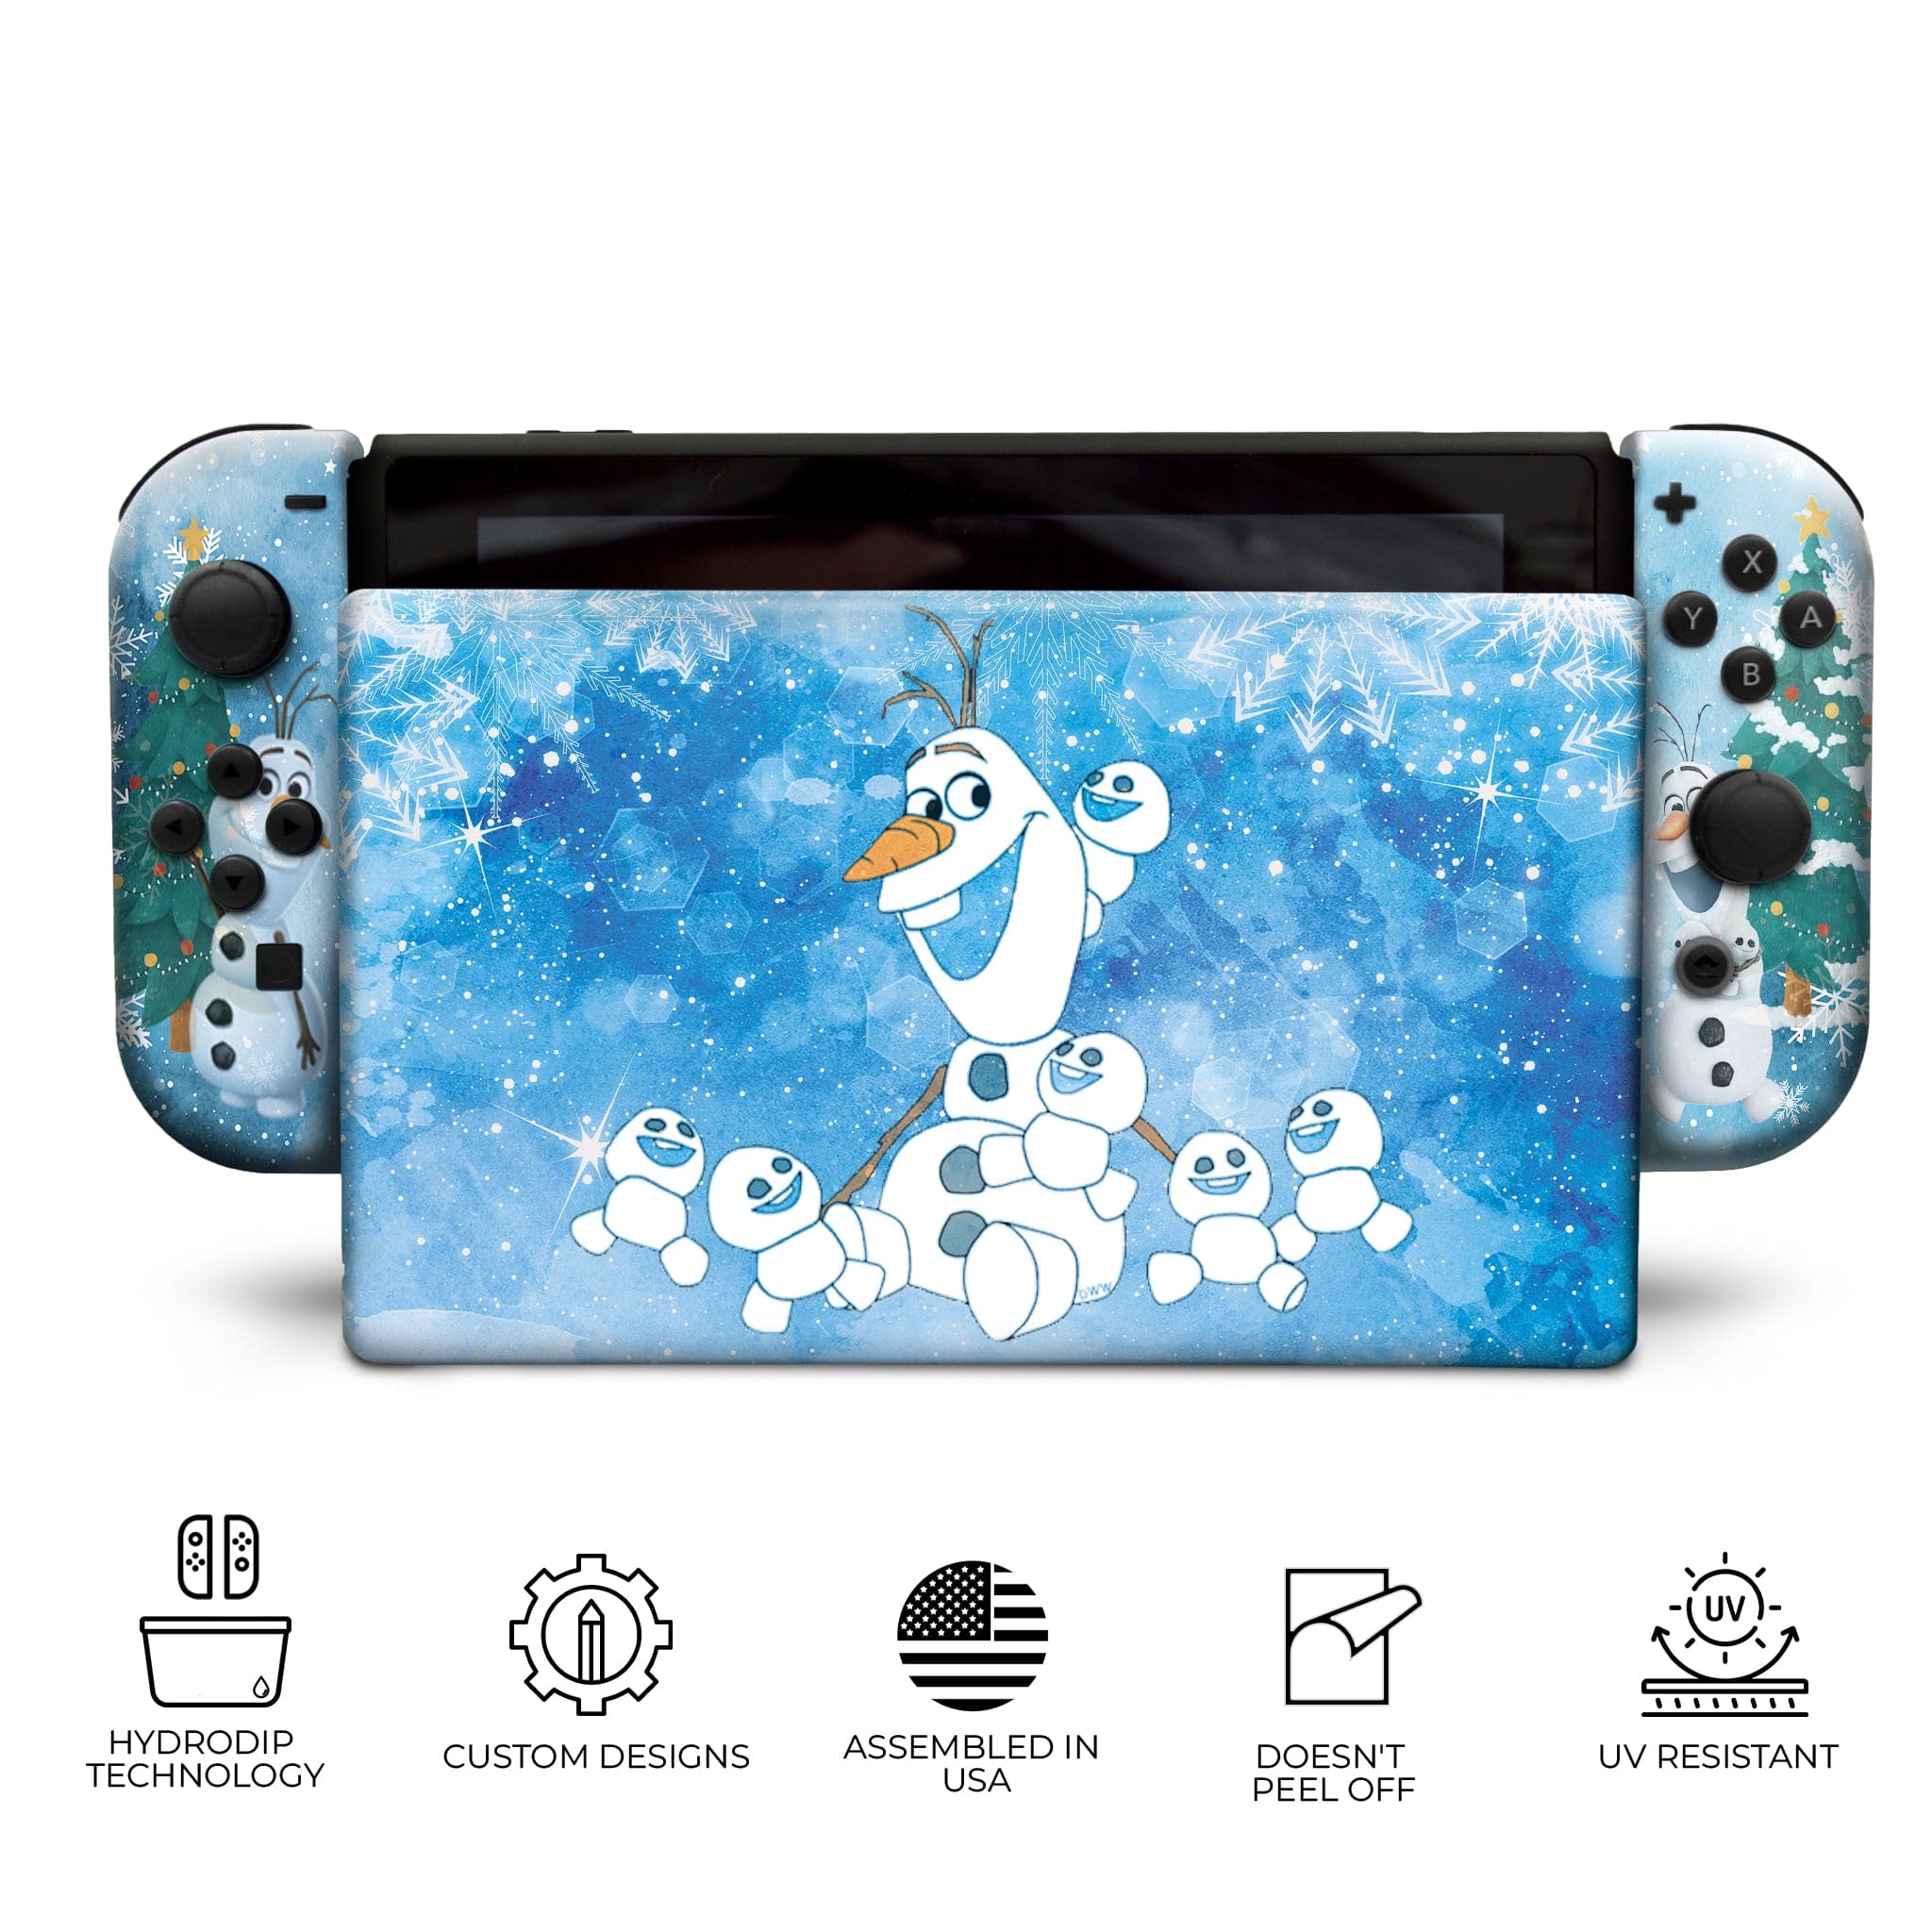 Olaf's Frozen Adventure Nintendo Switch Full Set by Nintendo